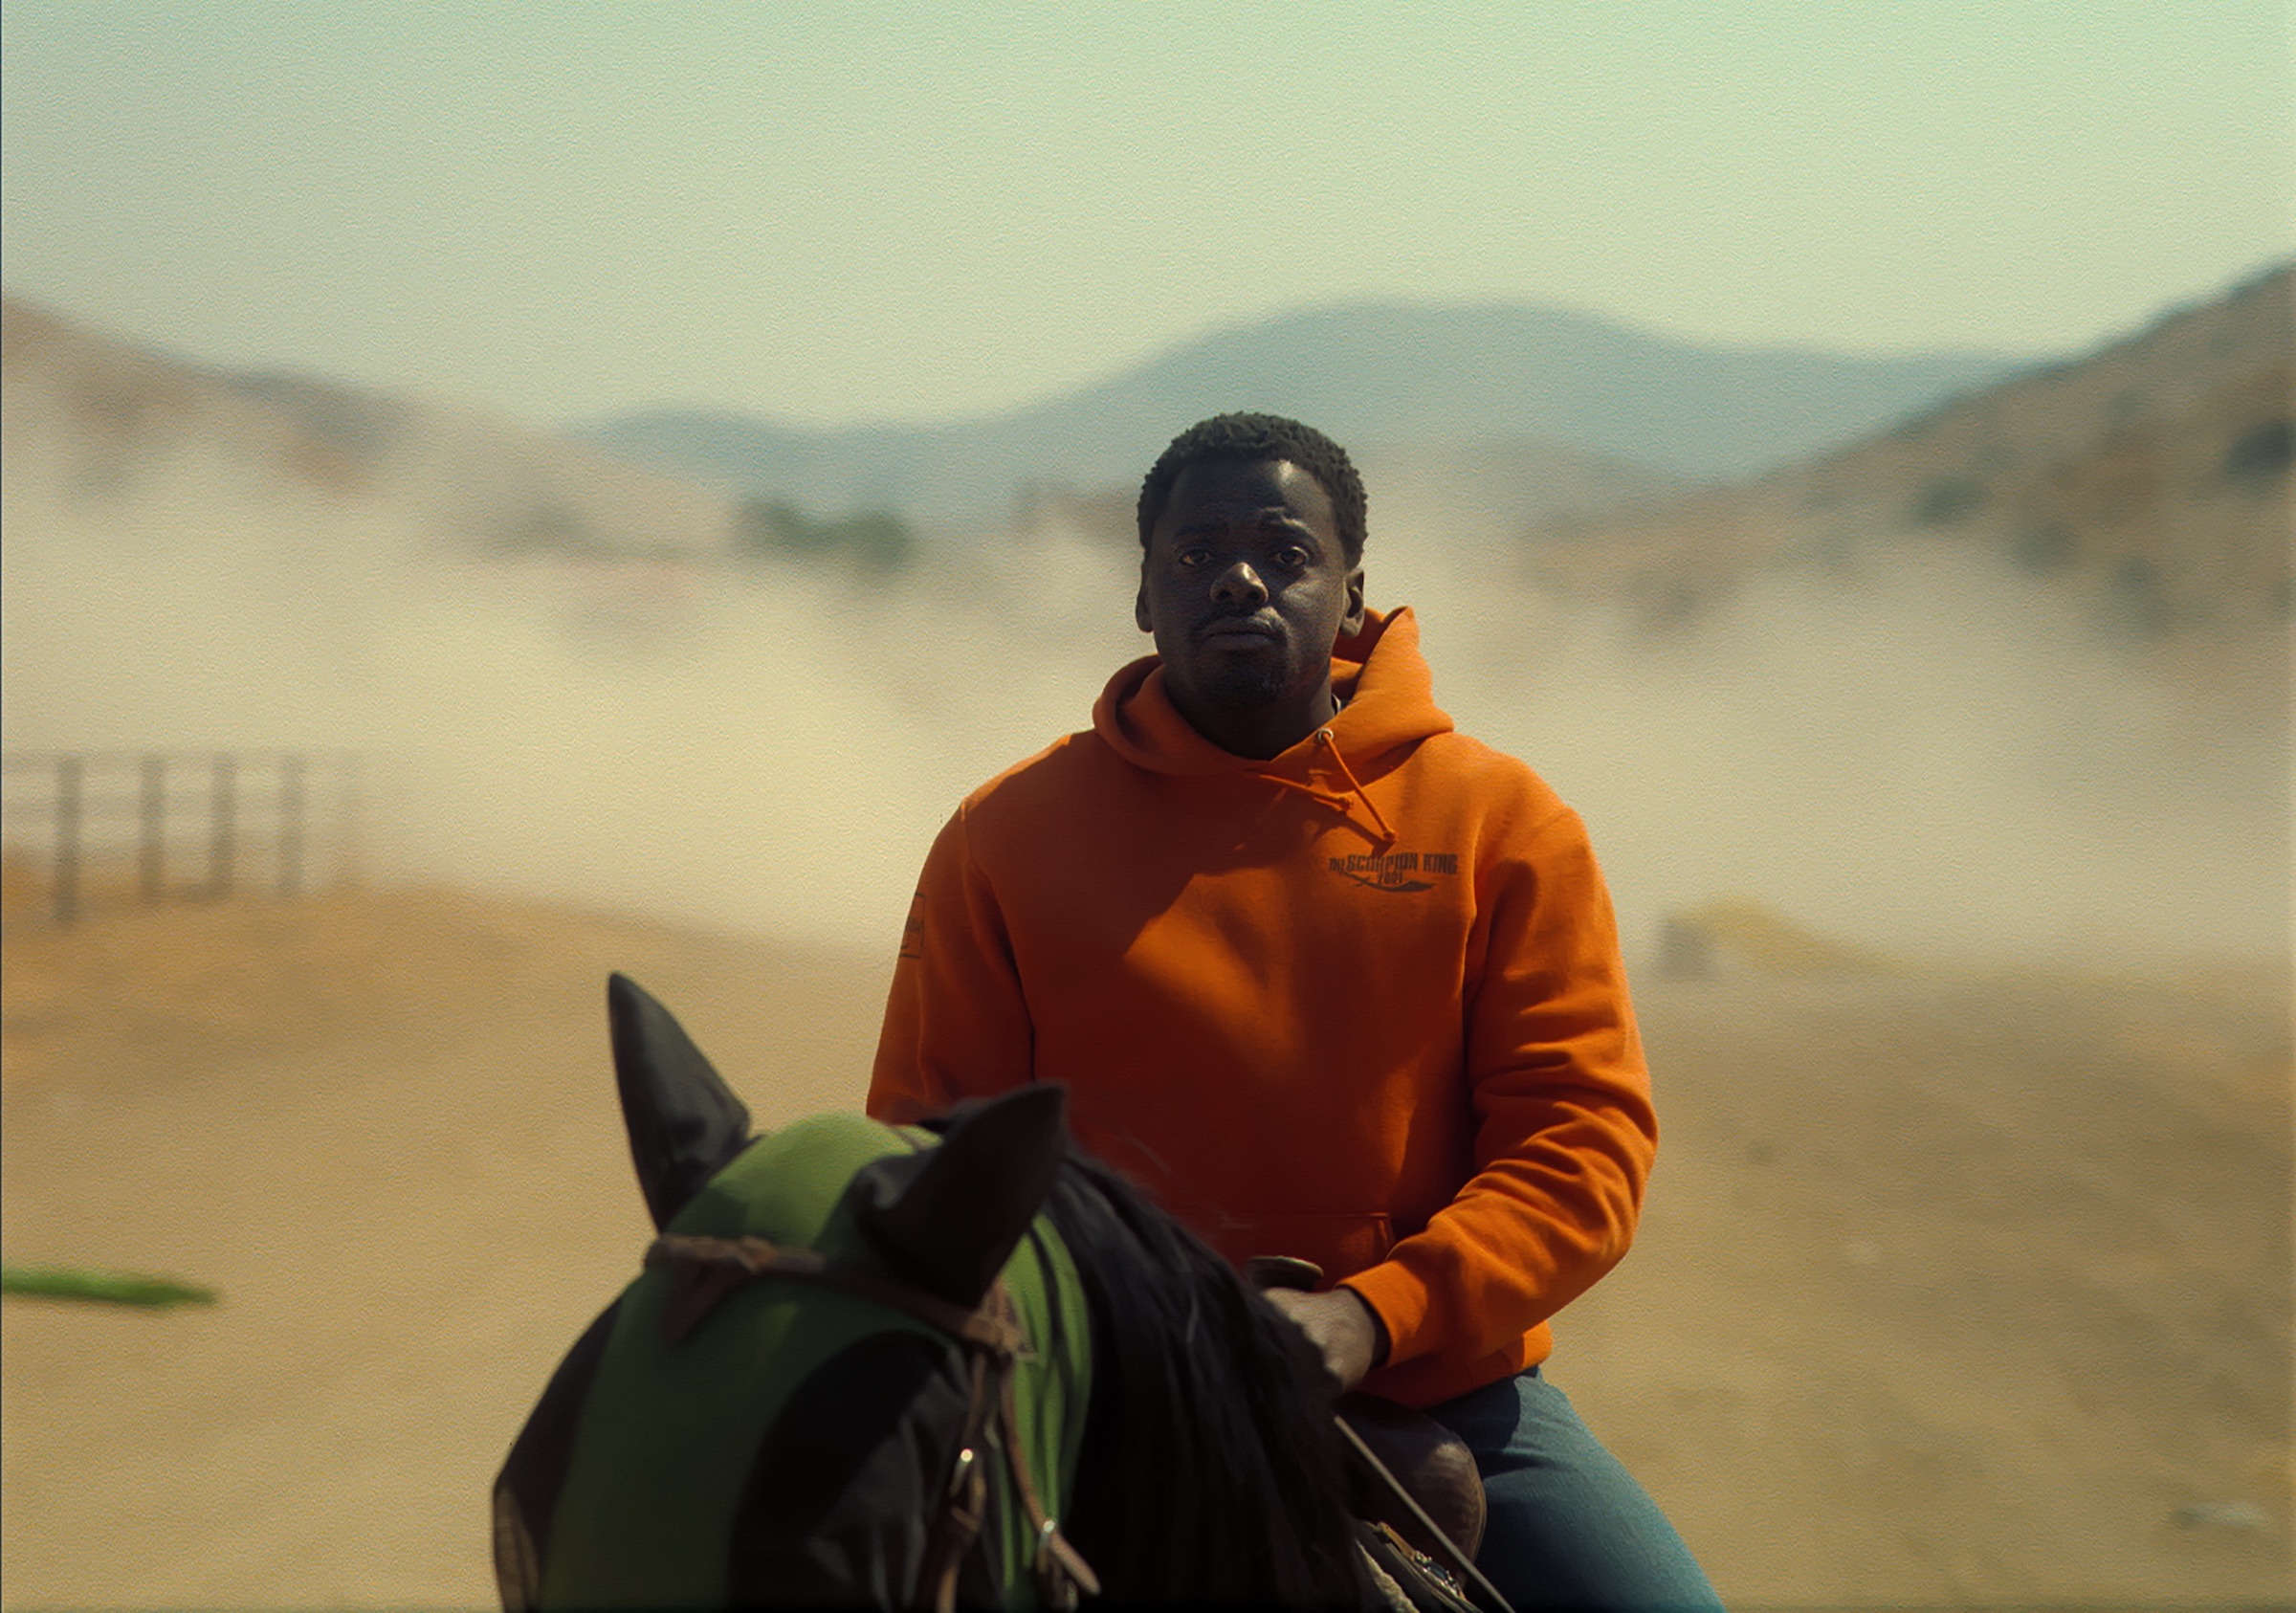 Jordan Peele in an orange hoodie, on horseback, rides toward the camera